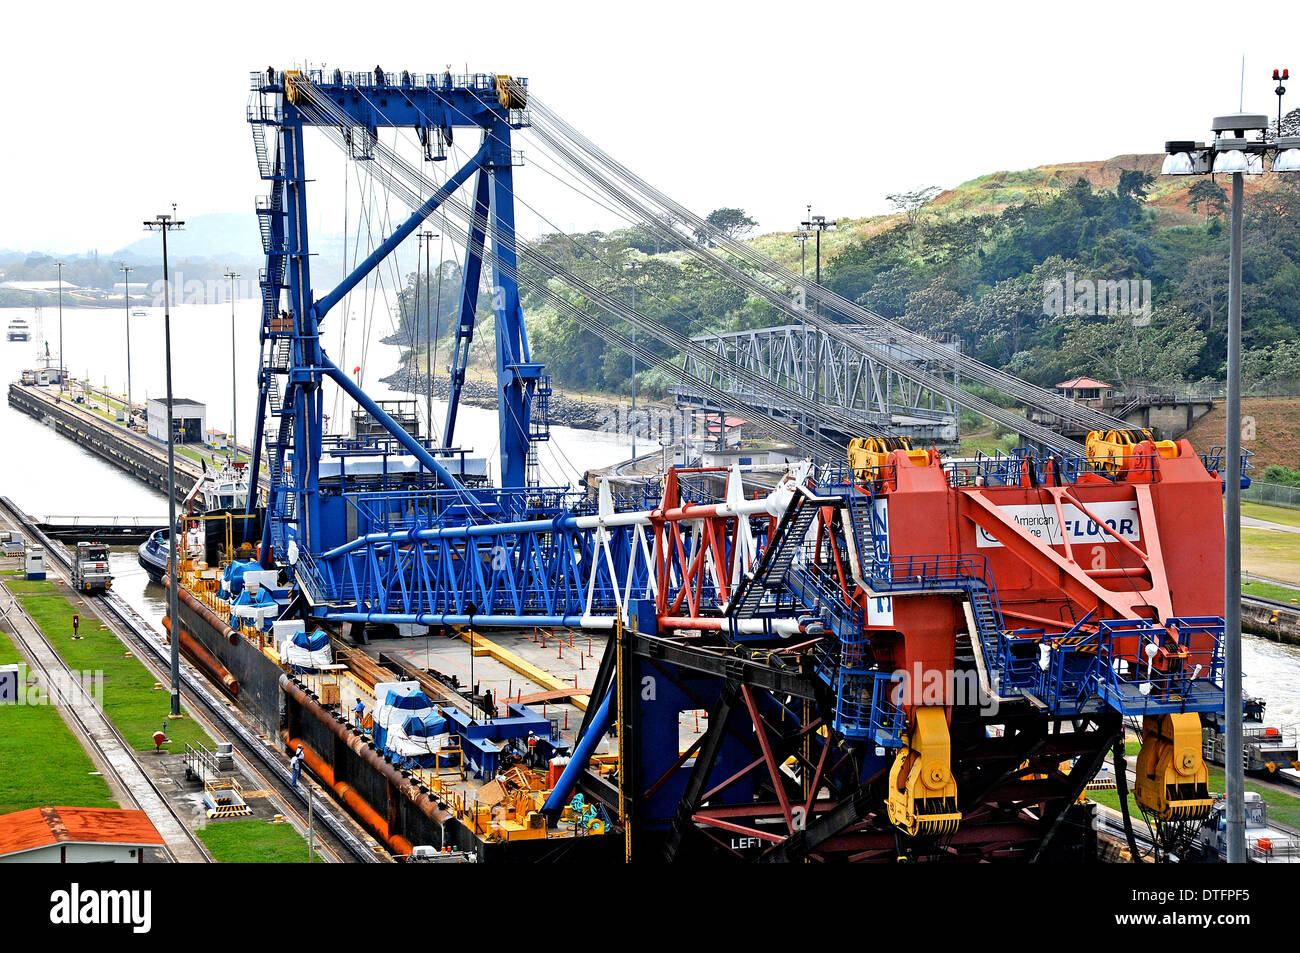 Left Coast Lifter, la gigantesca gru galleggiante di 'American Bridge Fluor' in Panama Canal Miraflores Locks Panama Foto Stock